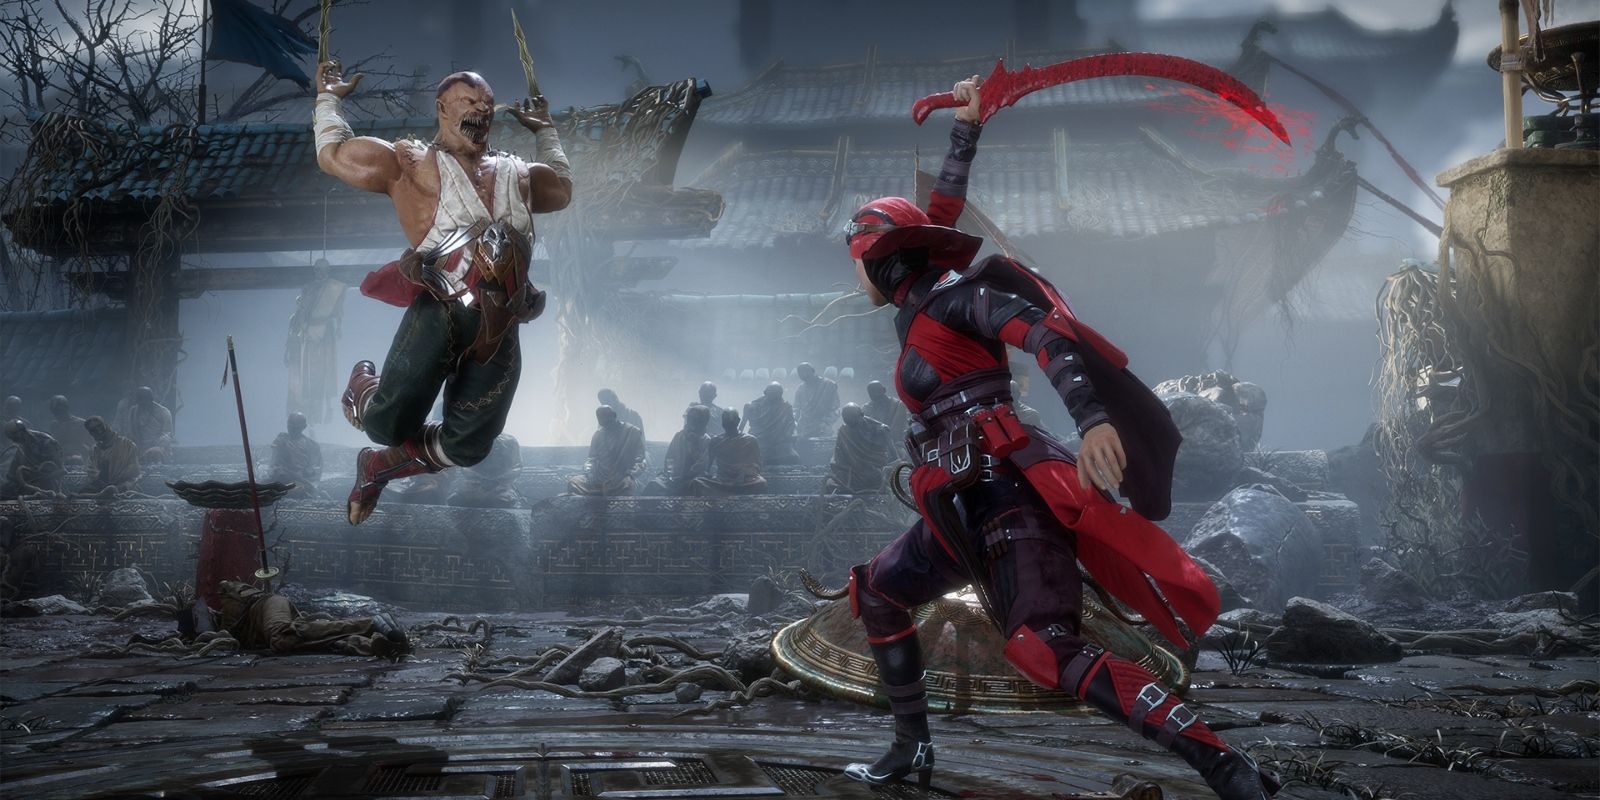 Fight underway in Mortal Kombat 11